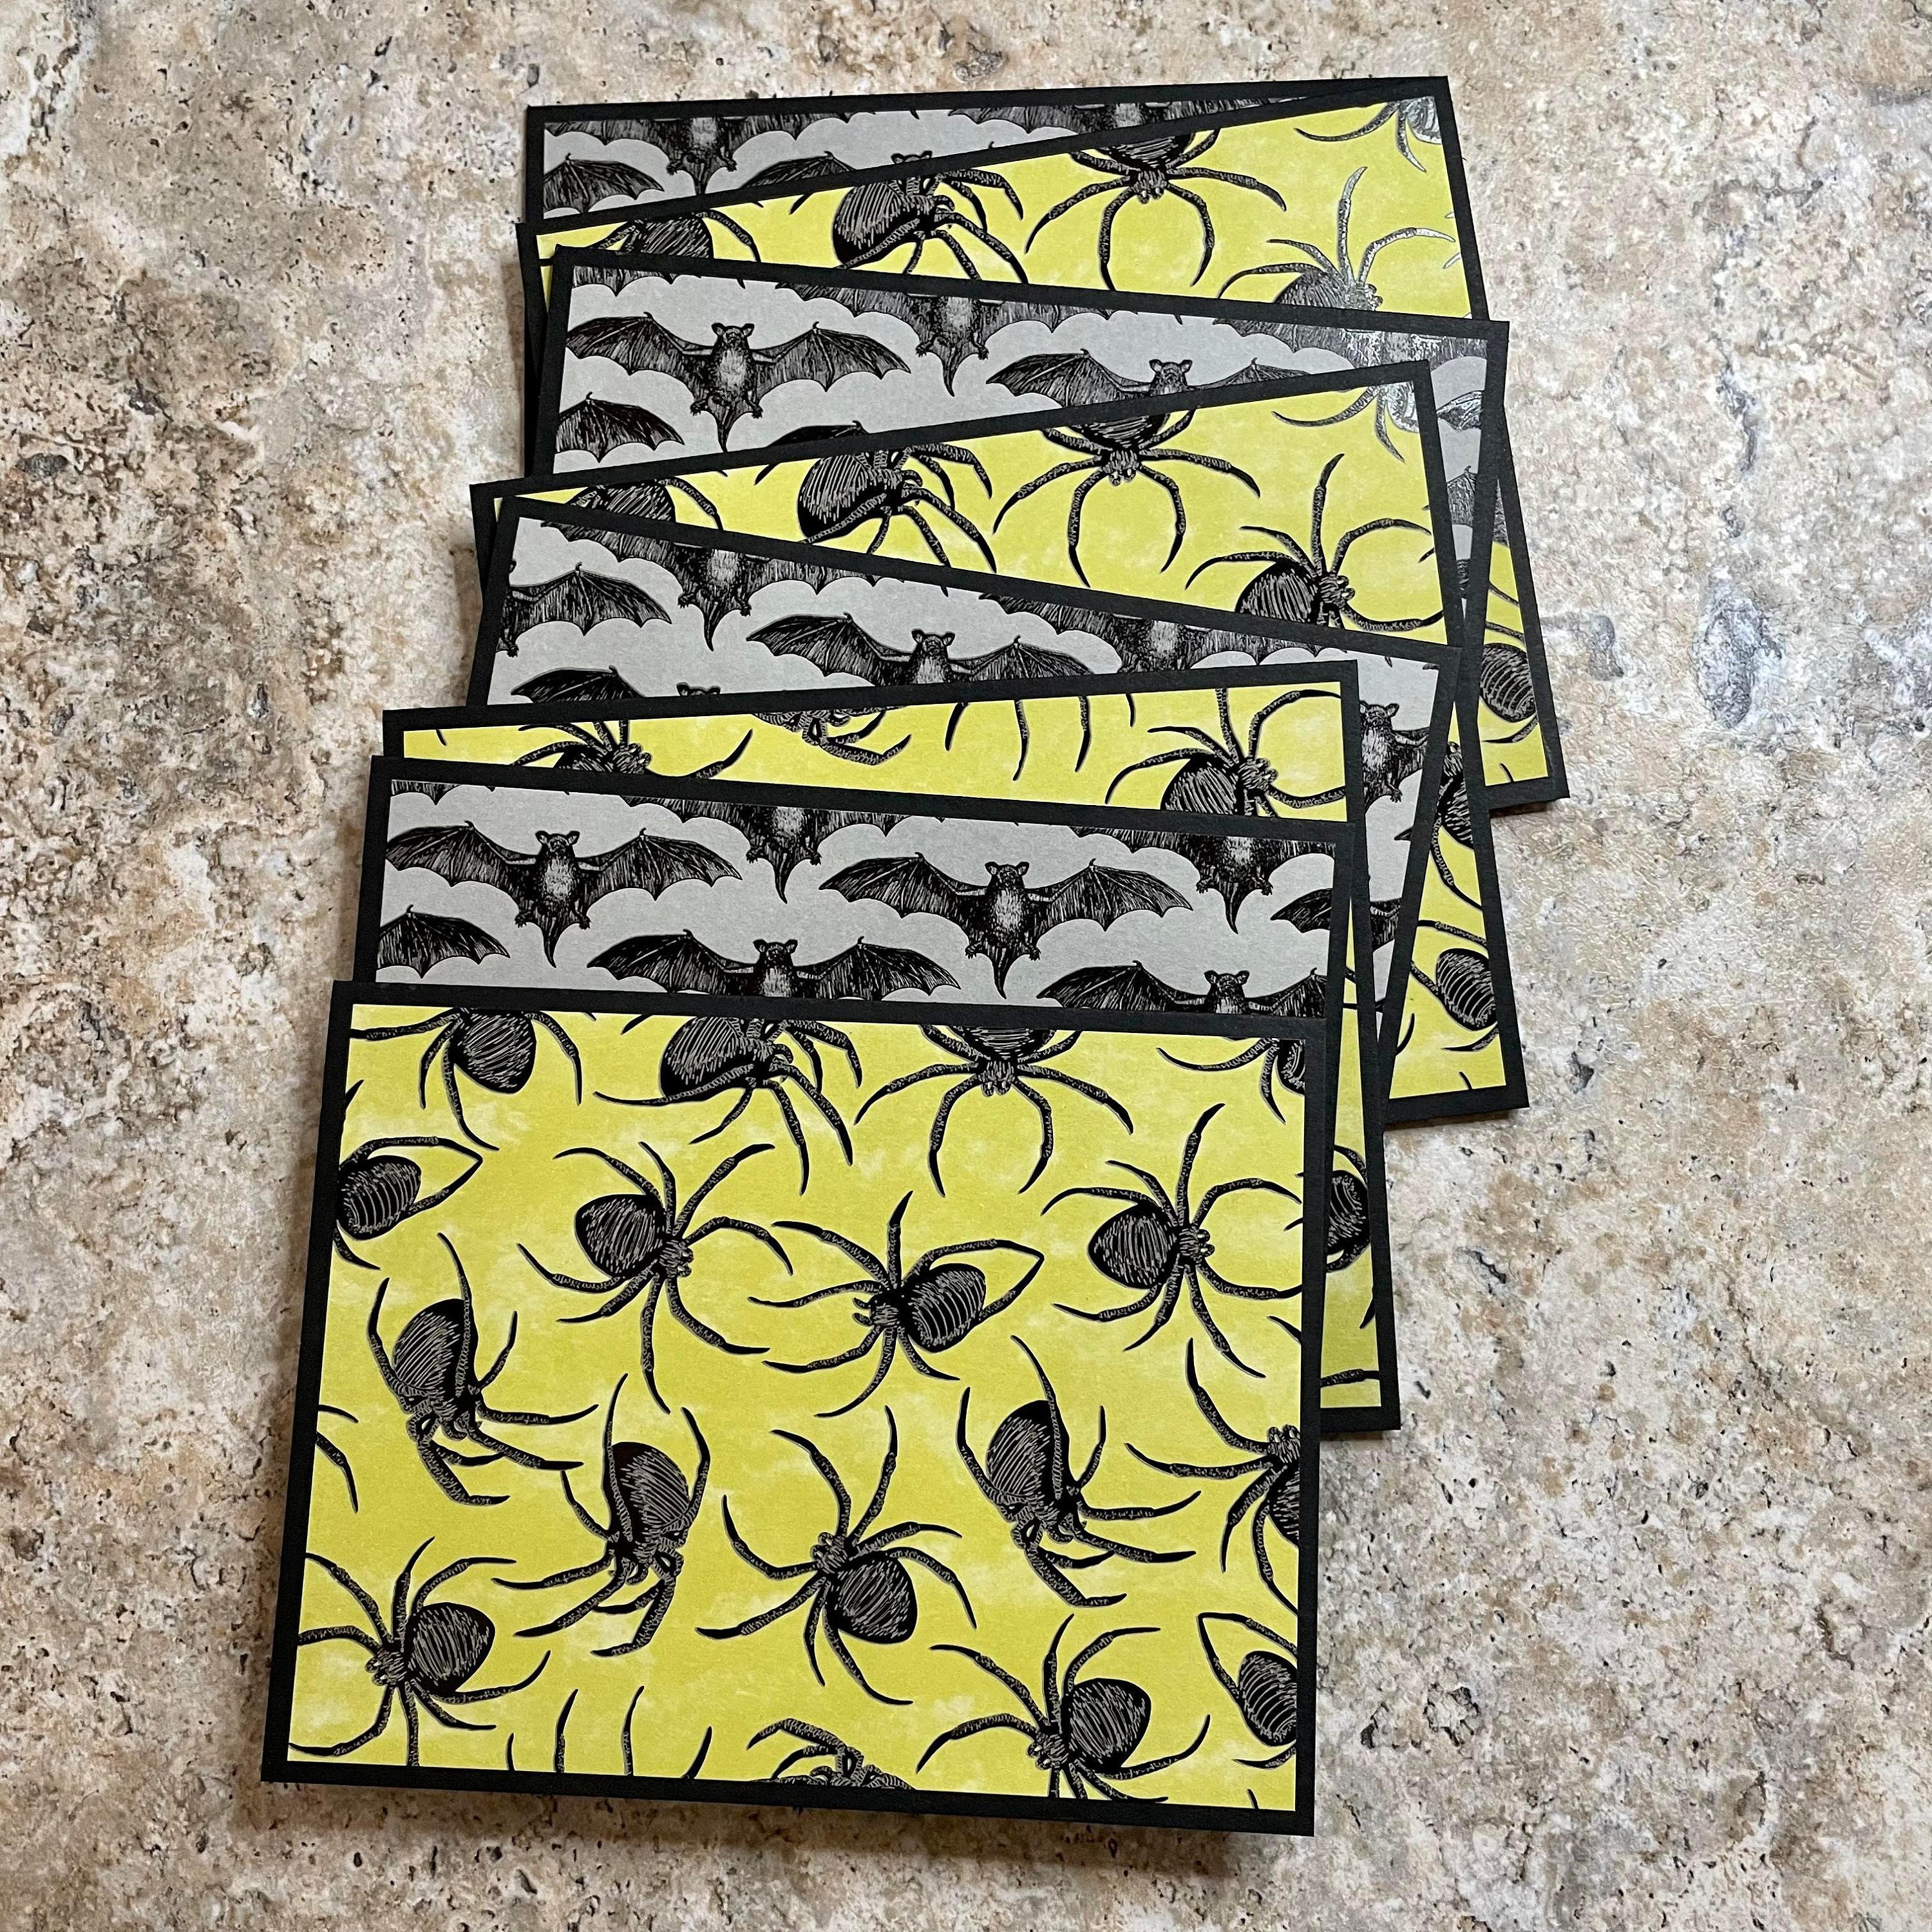 Floral Mini Note Cards, Bulk Mini Note Cards, Assorted Floral Mini